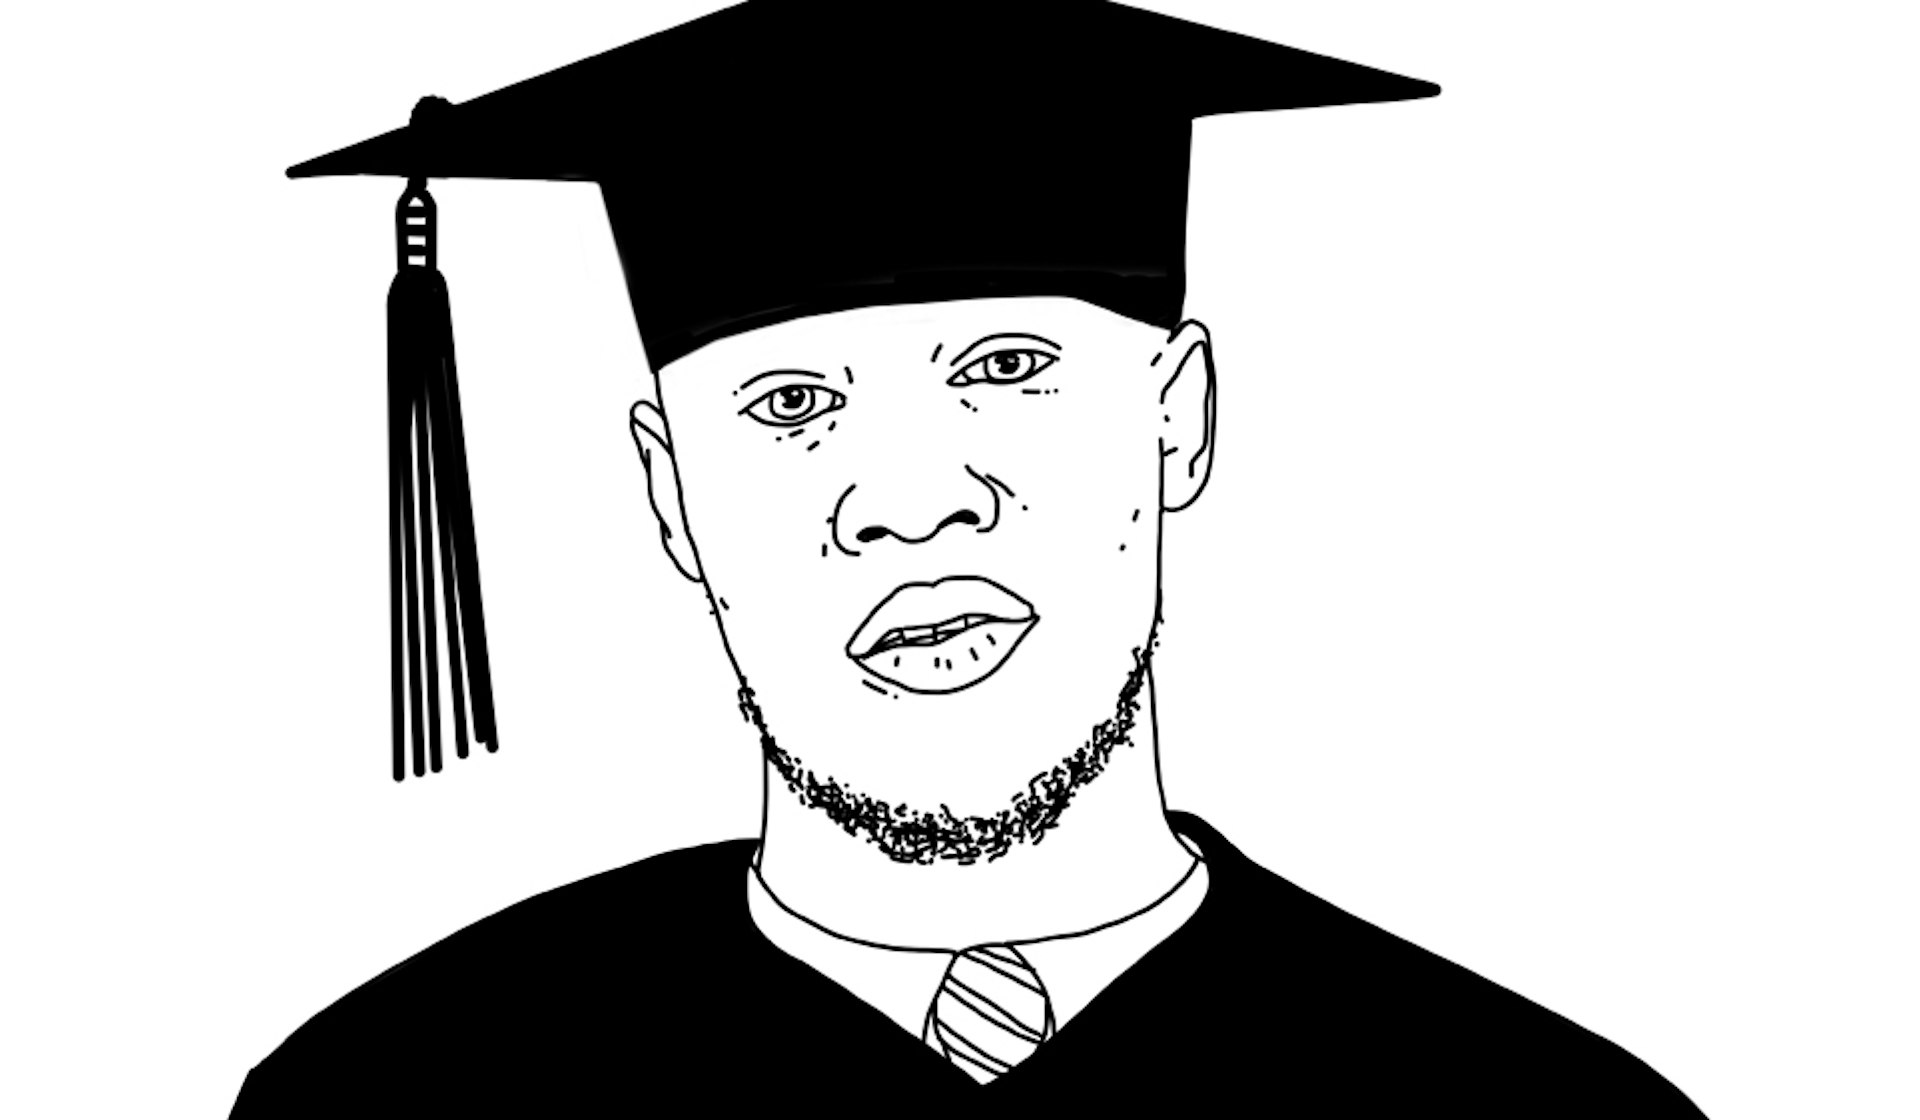 Stormzy has made me proud to be a black Cambridge graduate